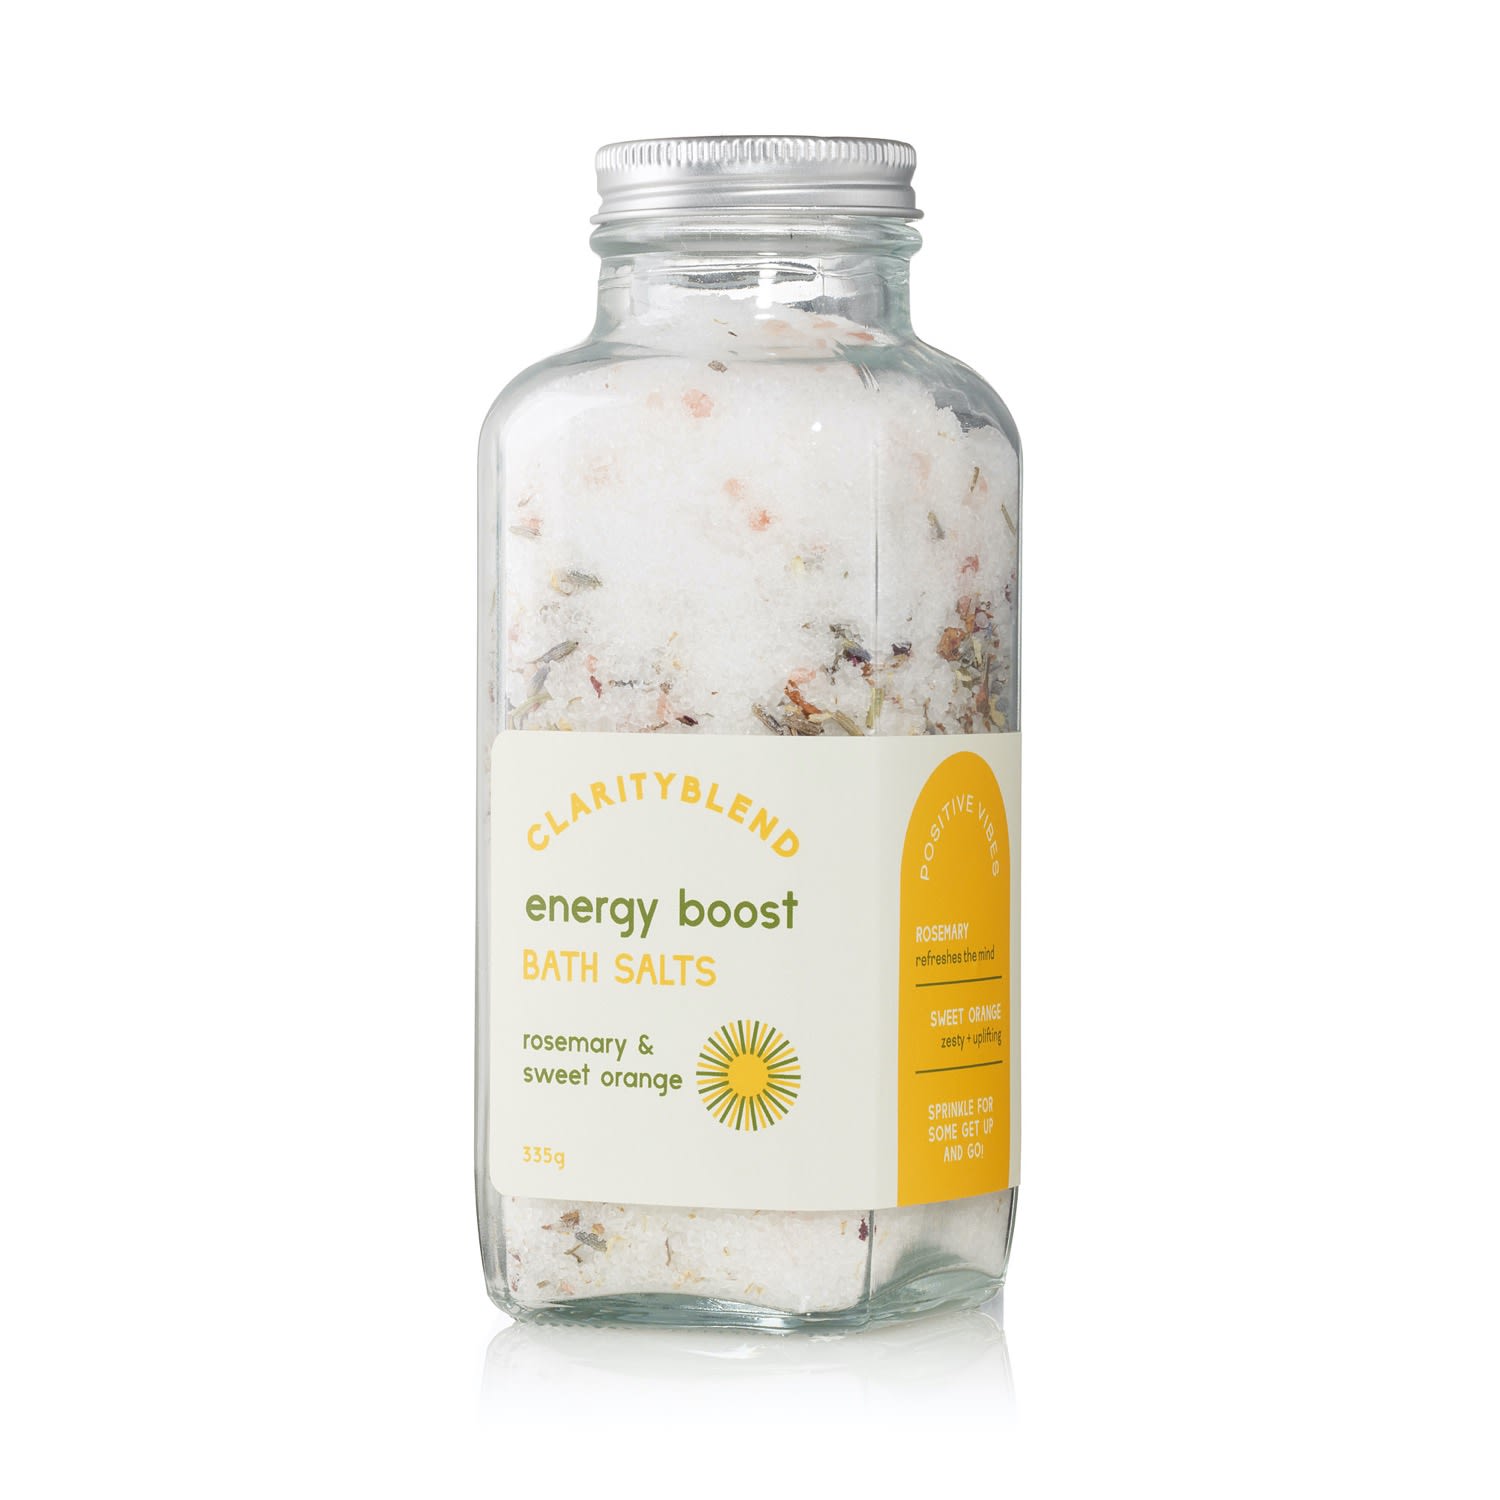 Energy Boost Bath Salts Clarity Blend Aromatherapy